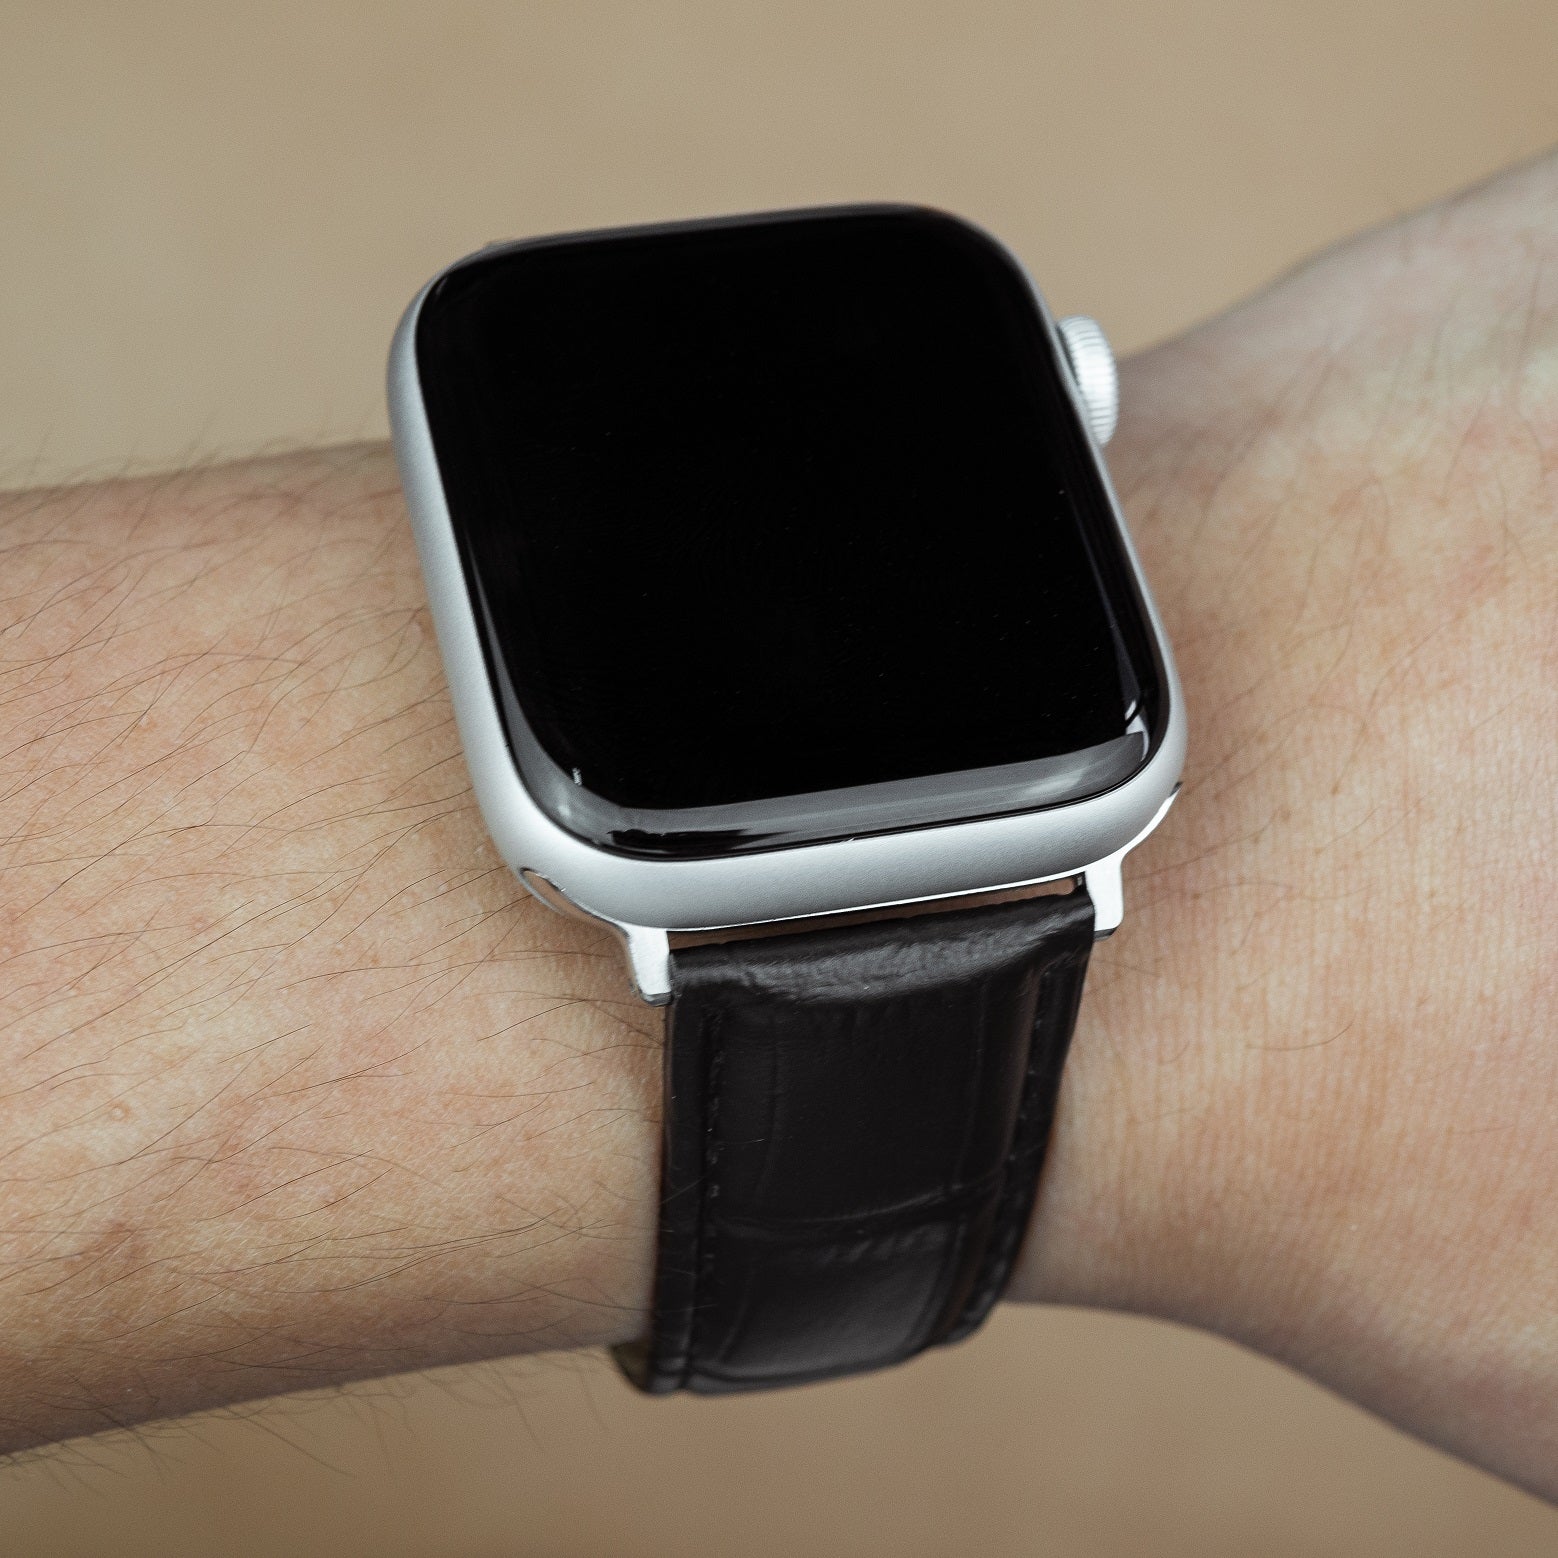 Apple Watch Genuine Croc Pattern Stitched Leather Strap in Black (38 & 40mm) - Nomad Watch Works MY